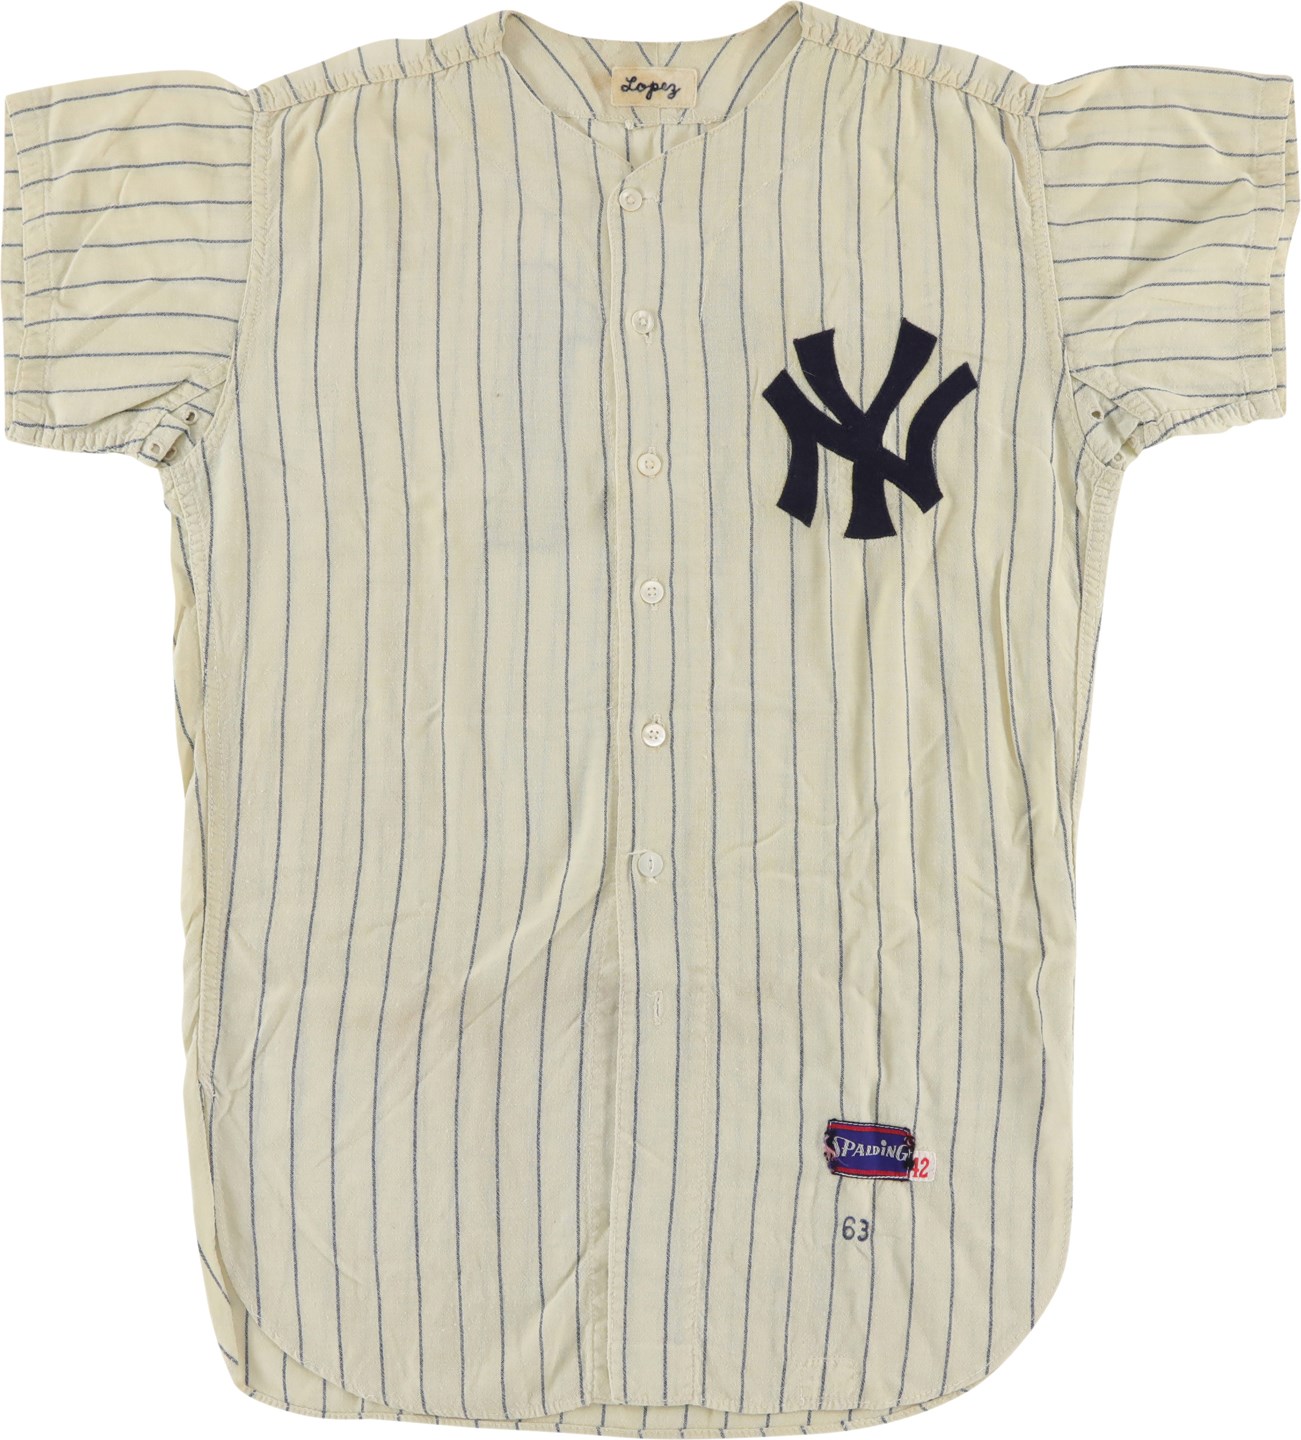 - 1963 Hector Lopez New York Yankees Game Worn Jersey